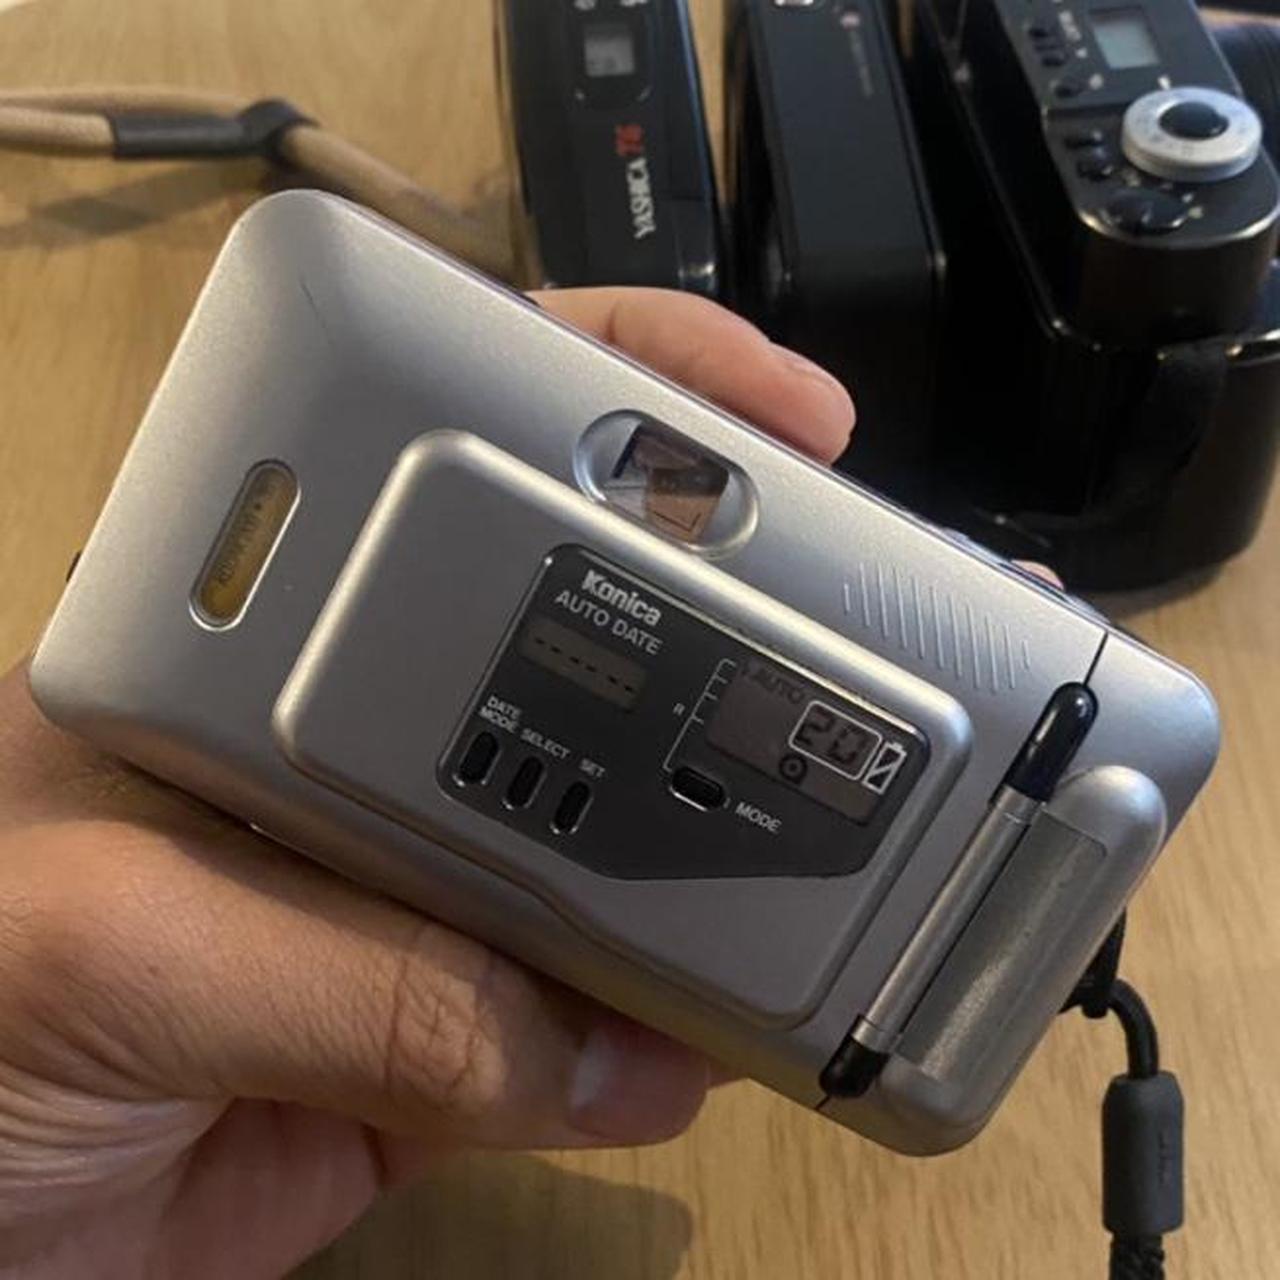 Konica Silver Cameras-and-accessories (2)